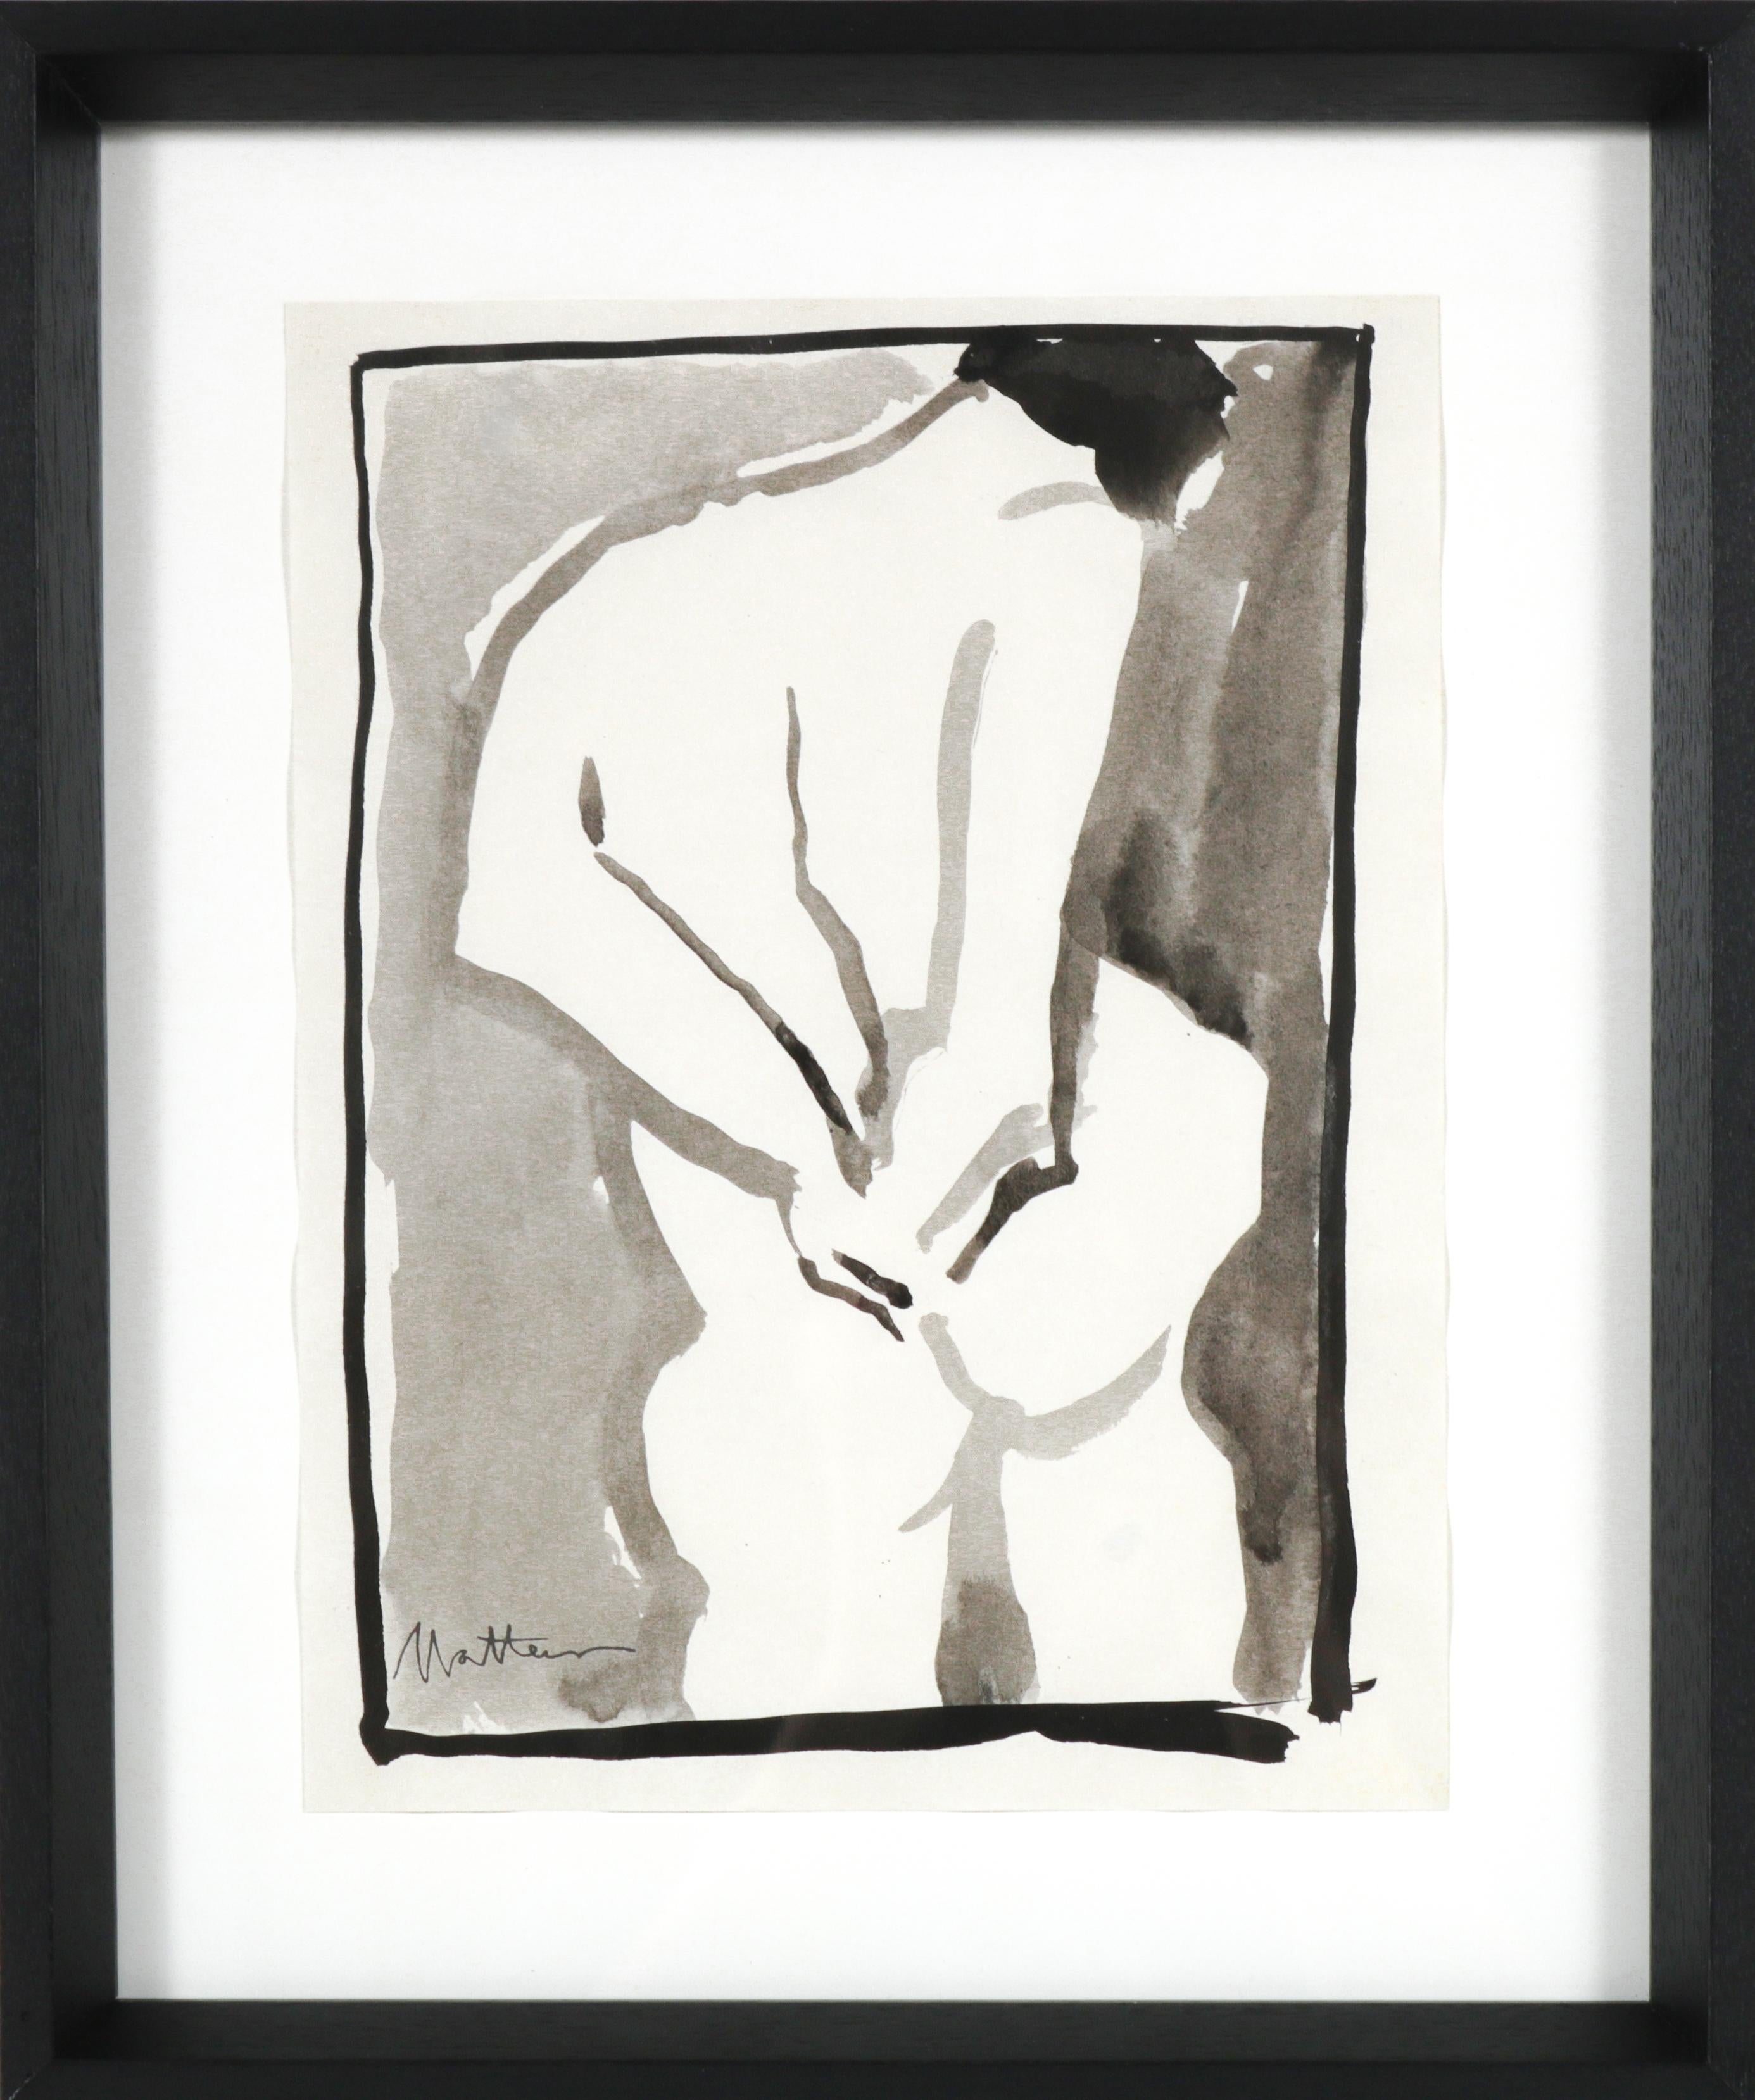 Rip Matteson Figurative Painting - Nude Figure Study 1995 Ink Wash